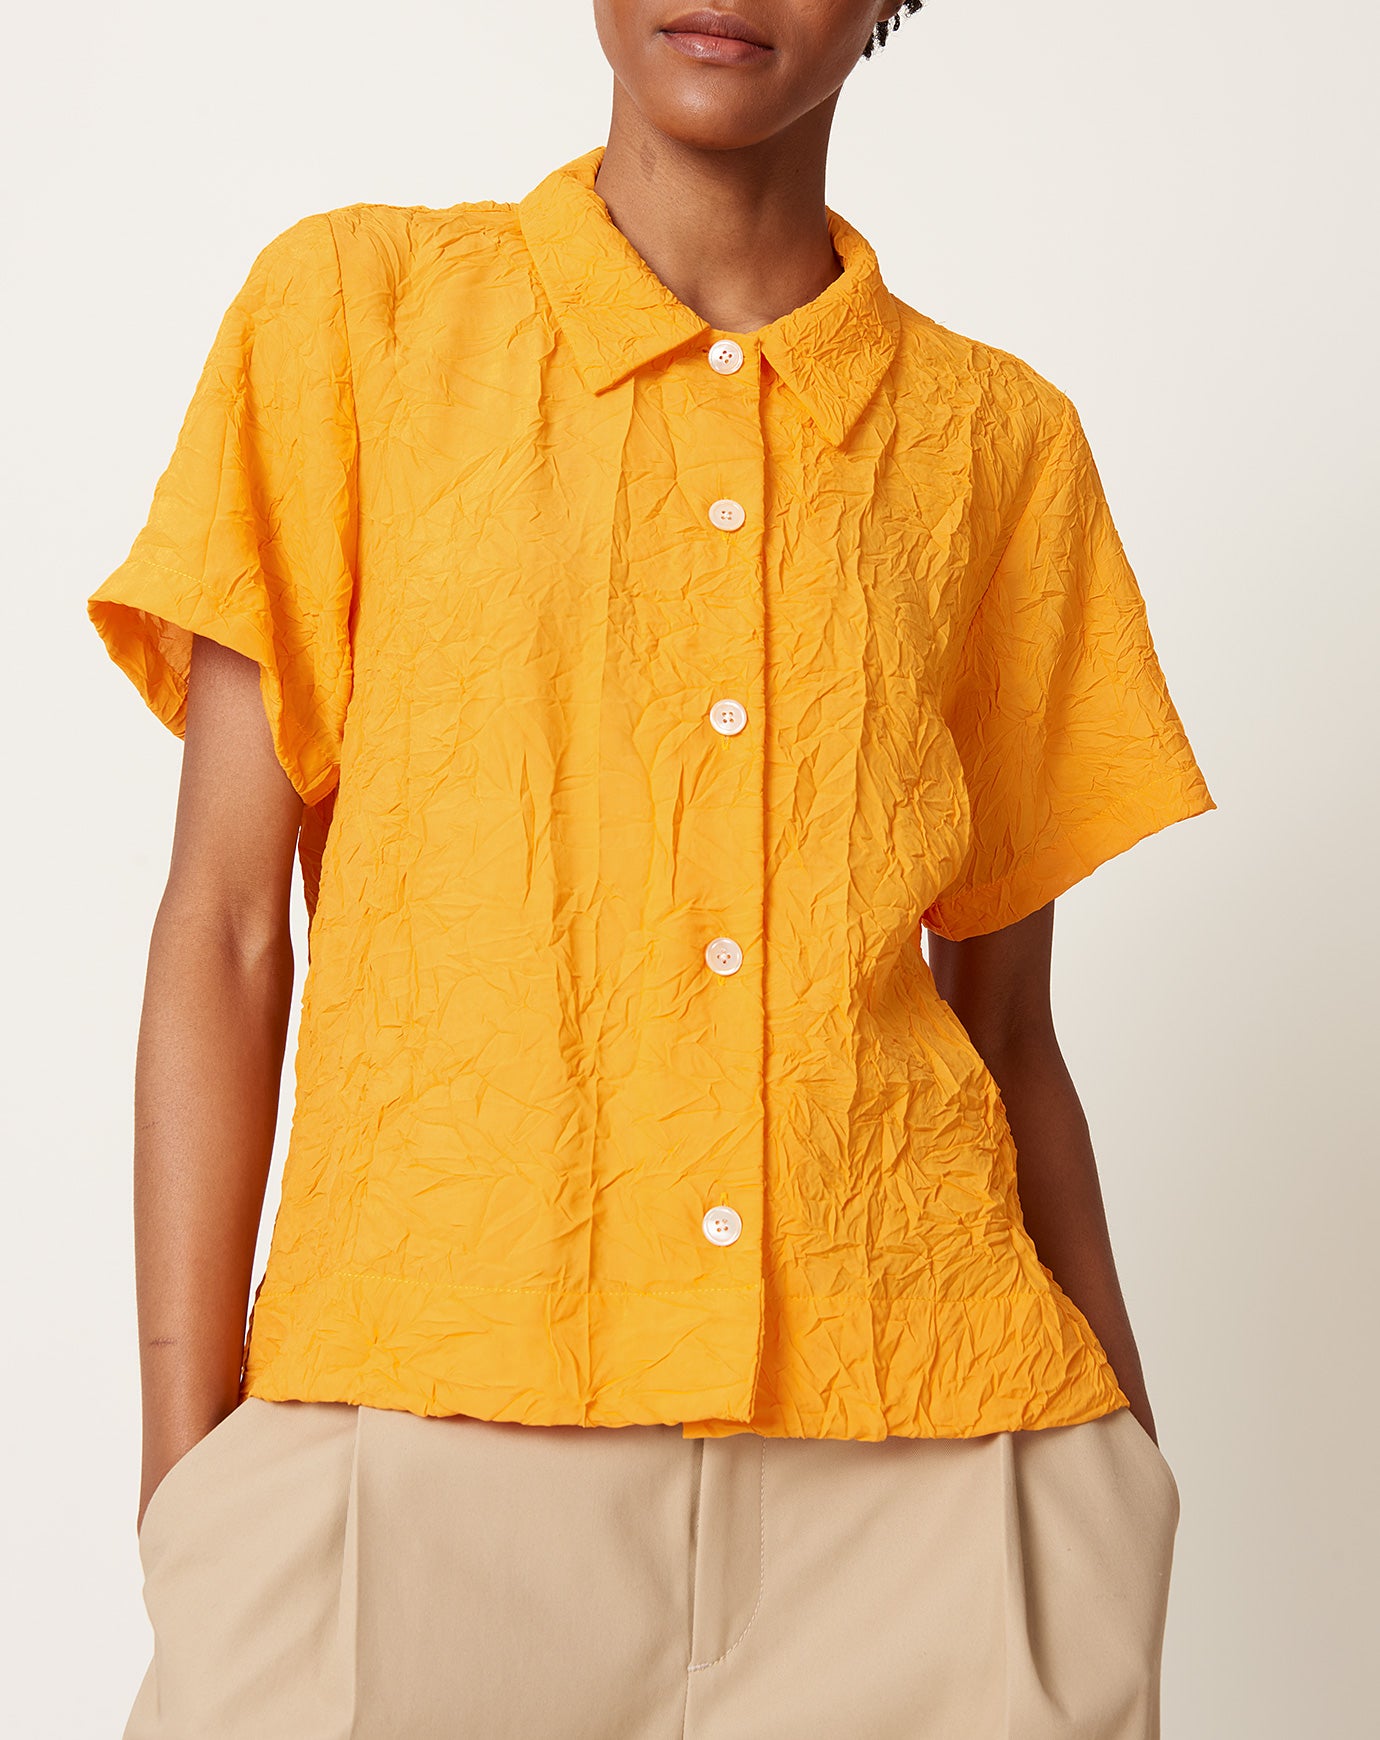 Caron Callahan Johanson Shirt in Tangerine Crinkle